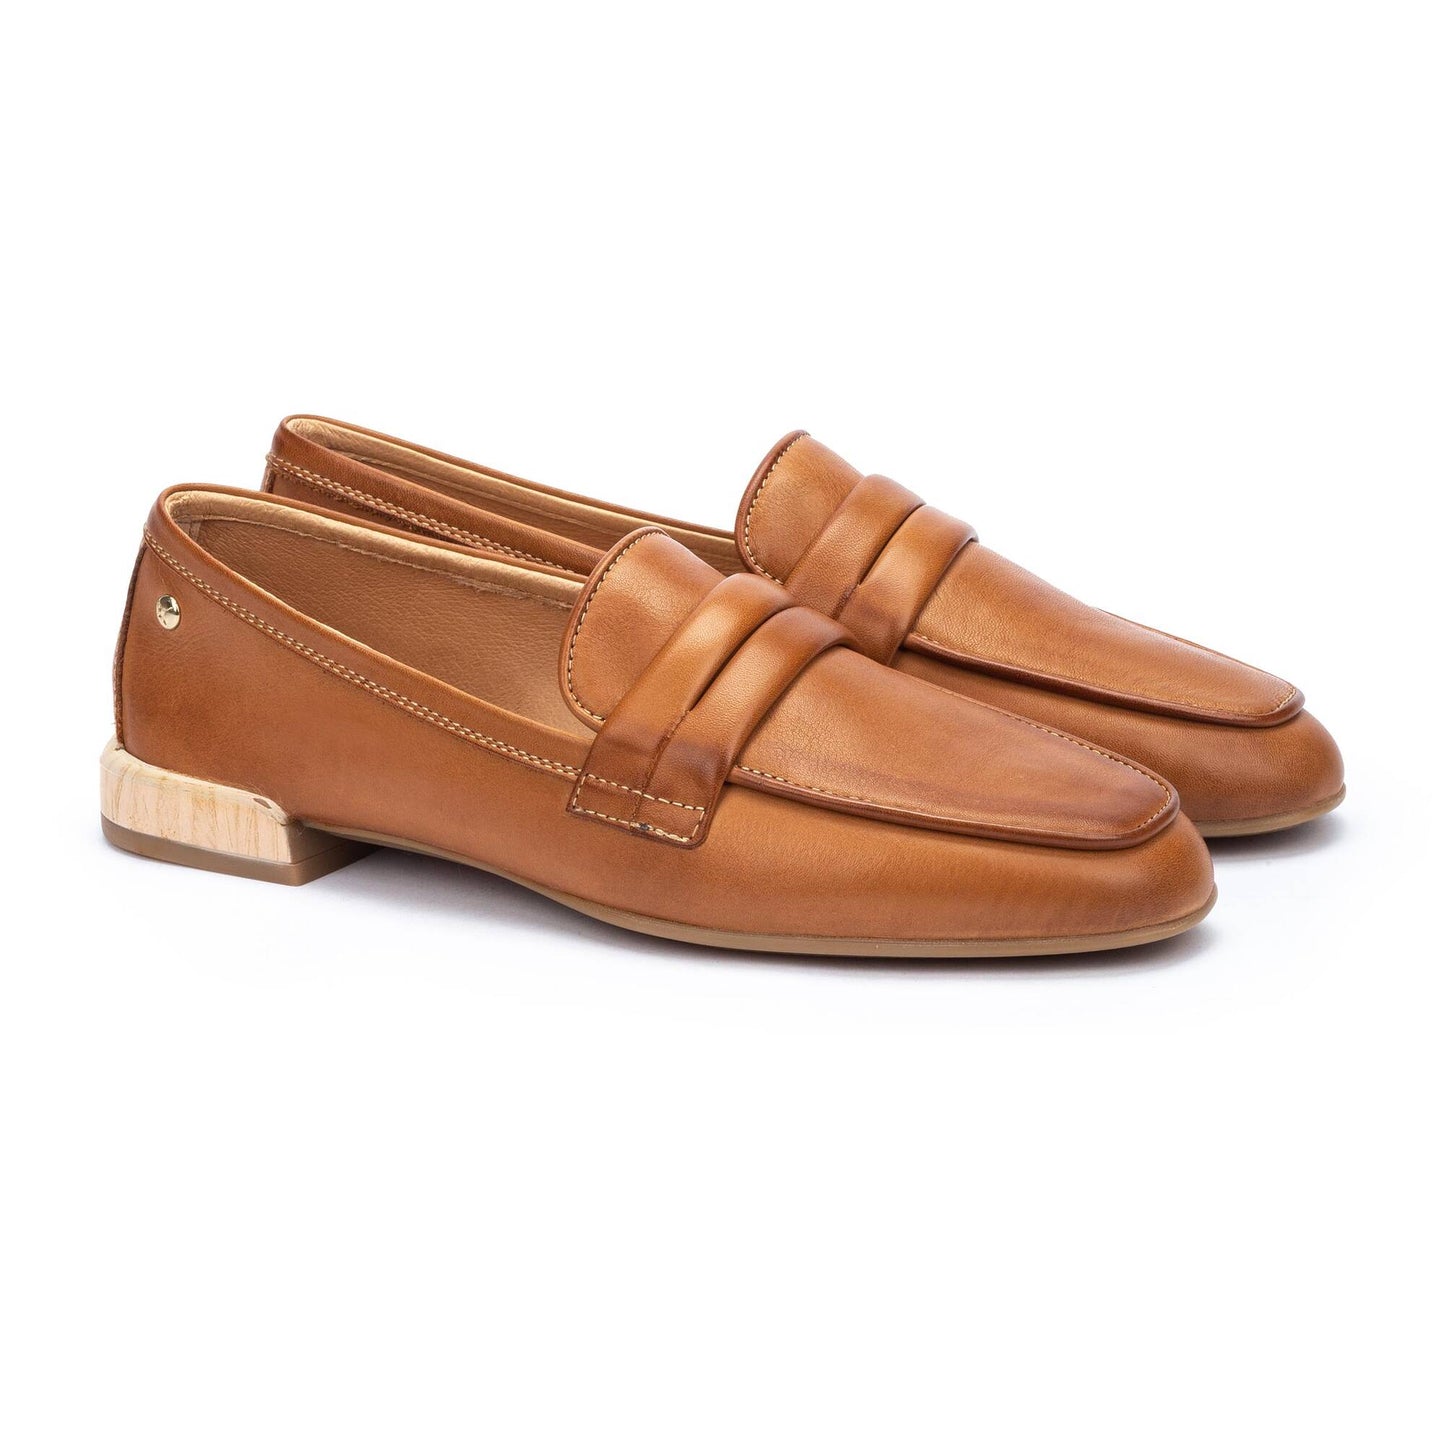 Pikolinos Women's Almeria W9W-3531 Leather Loafer Shoes Brandy Brown